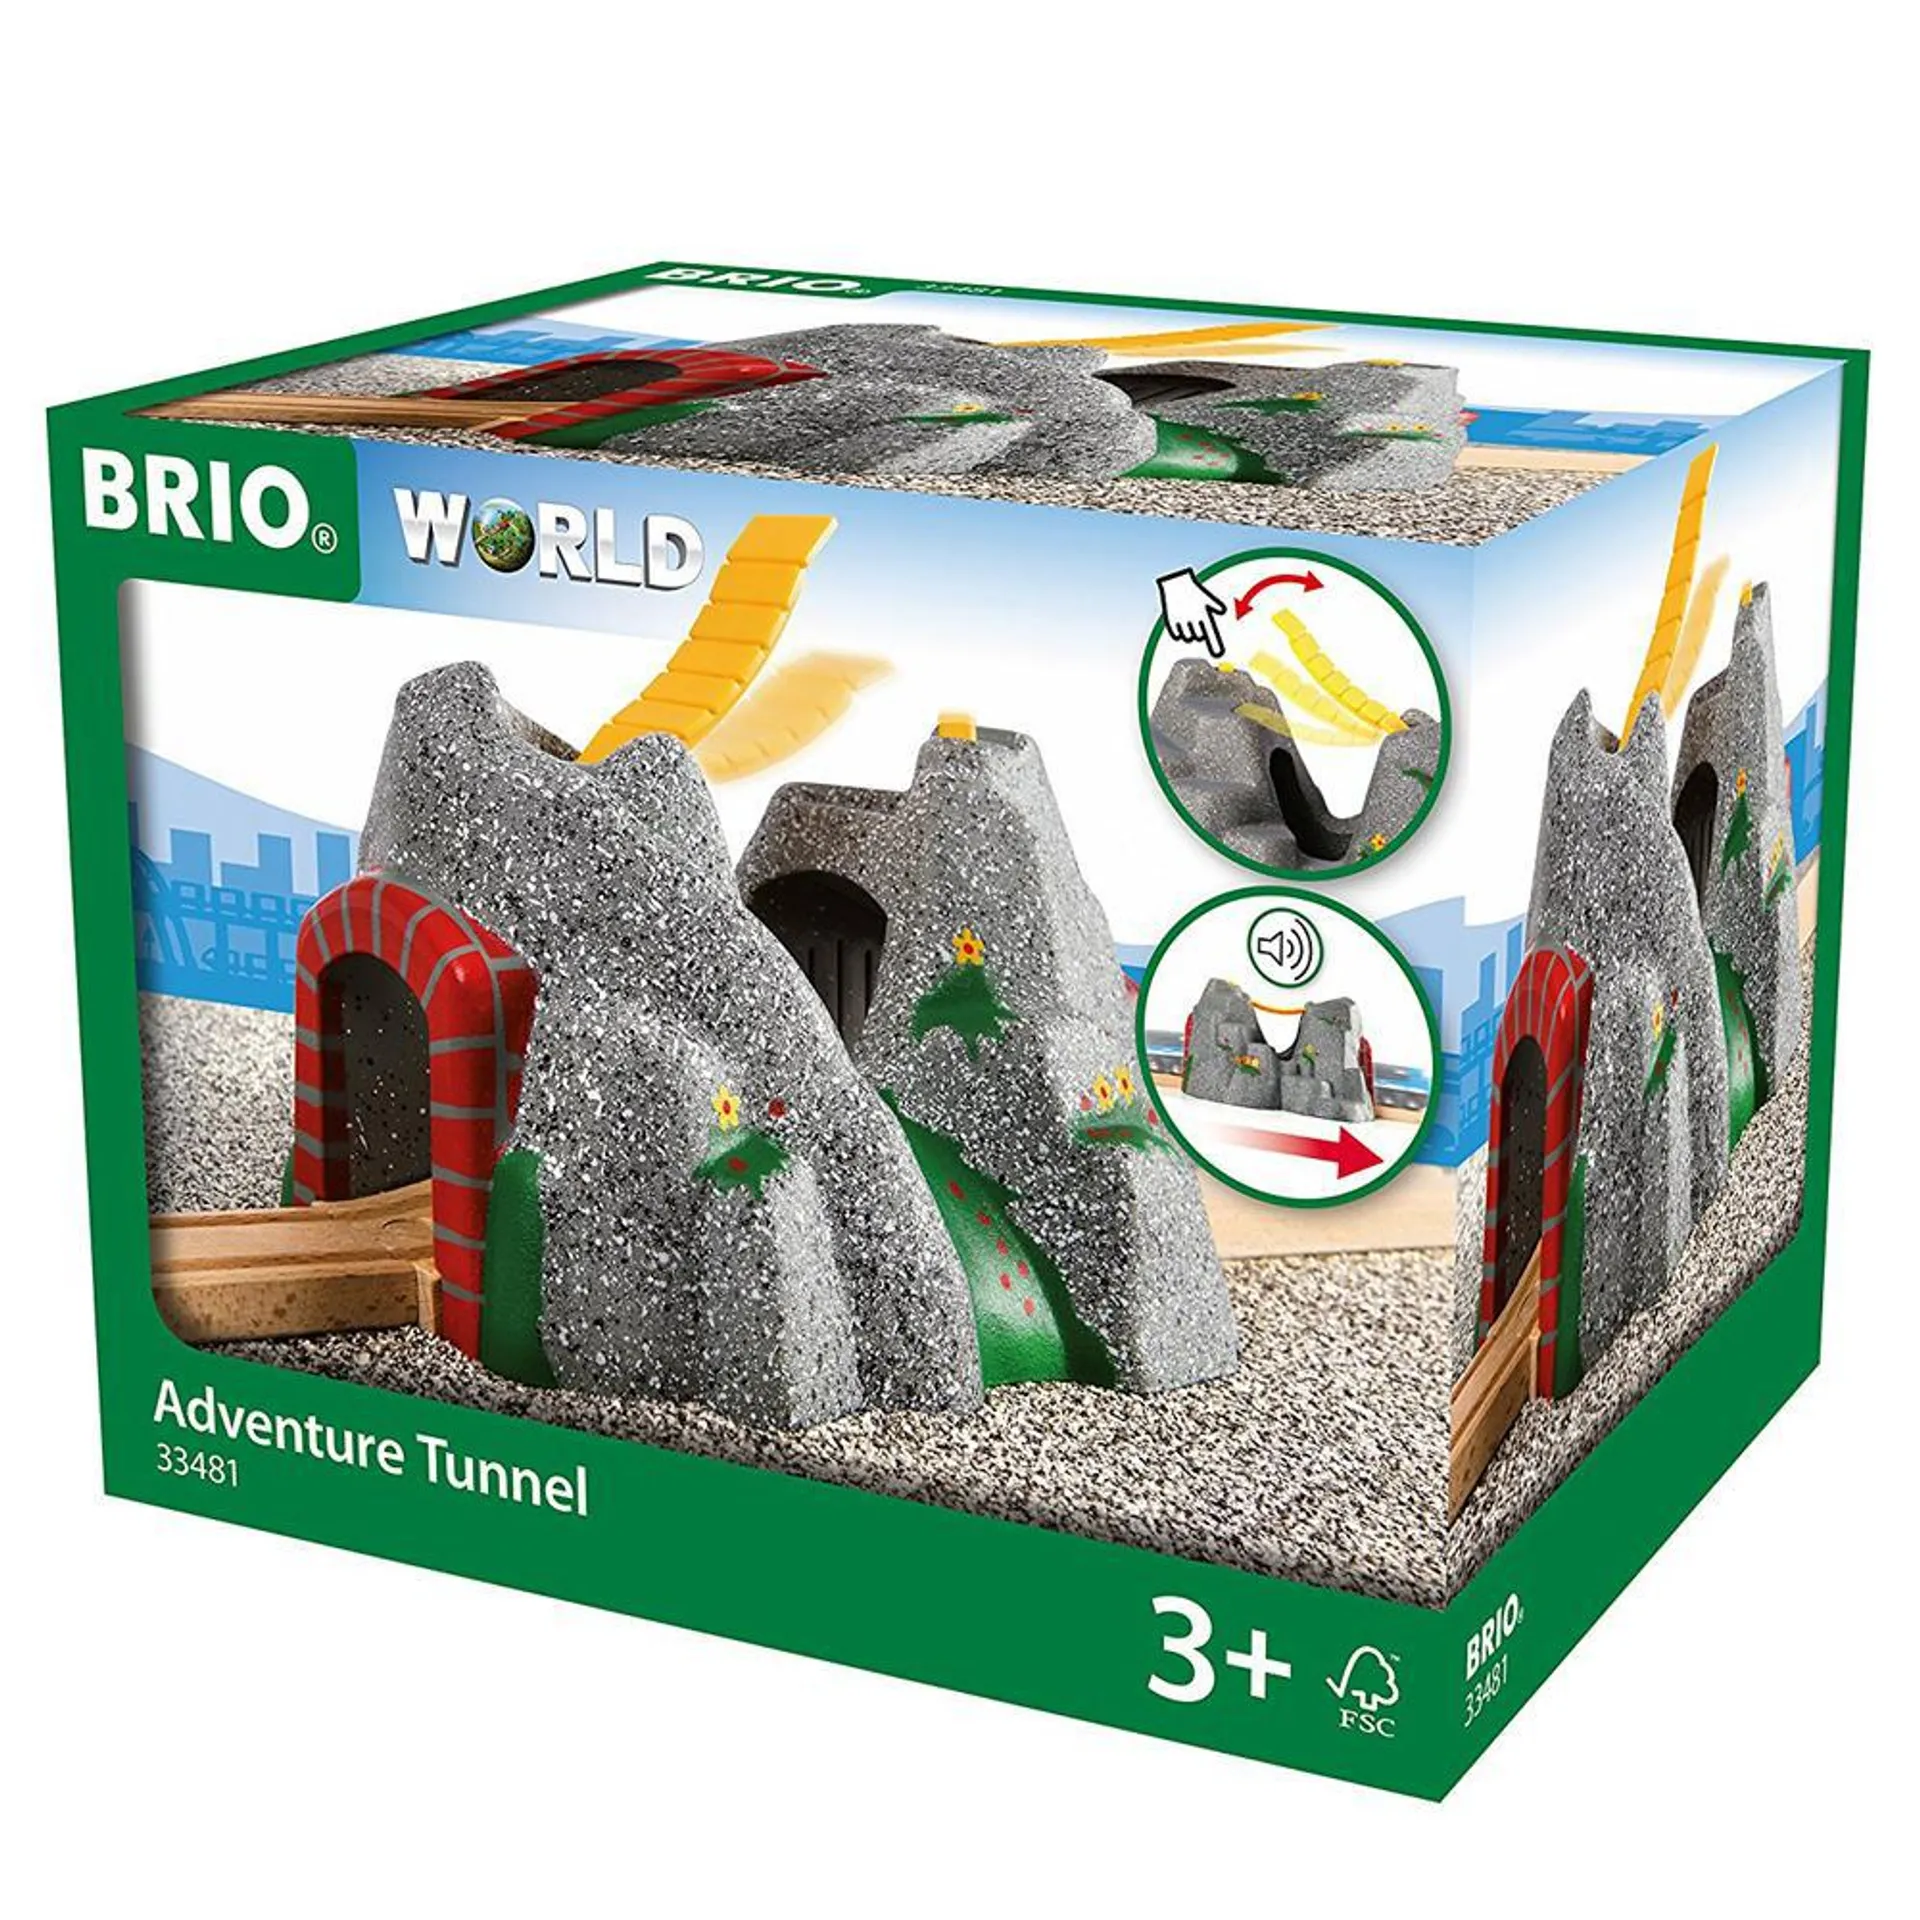 Brio World Adventure Tunnel 33481